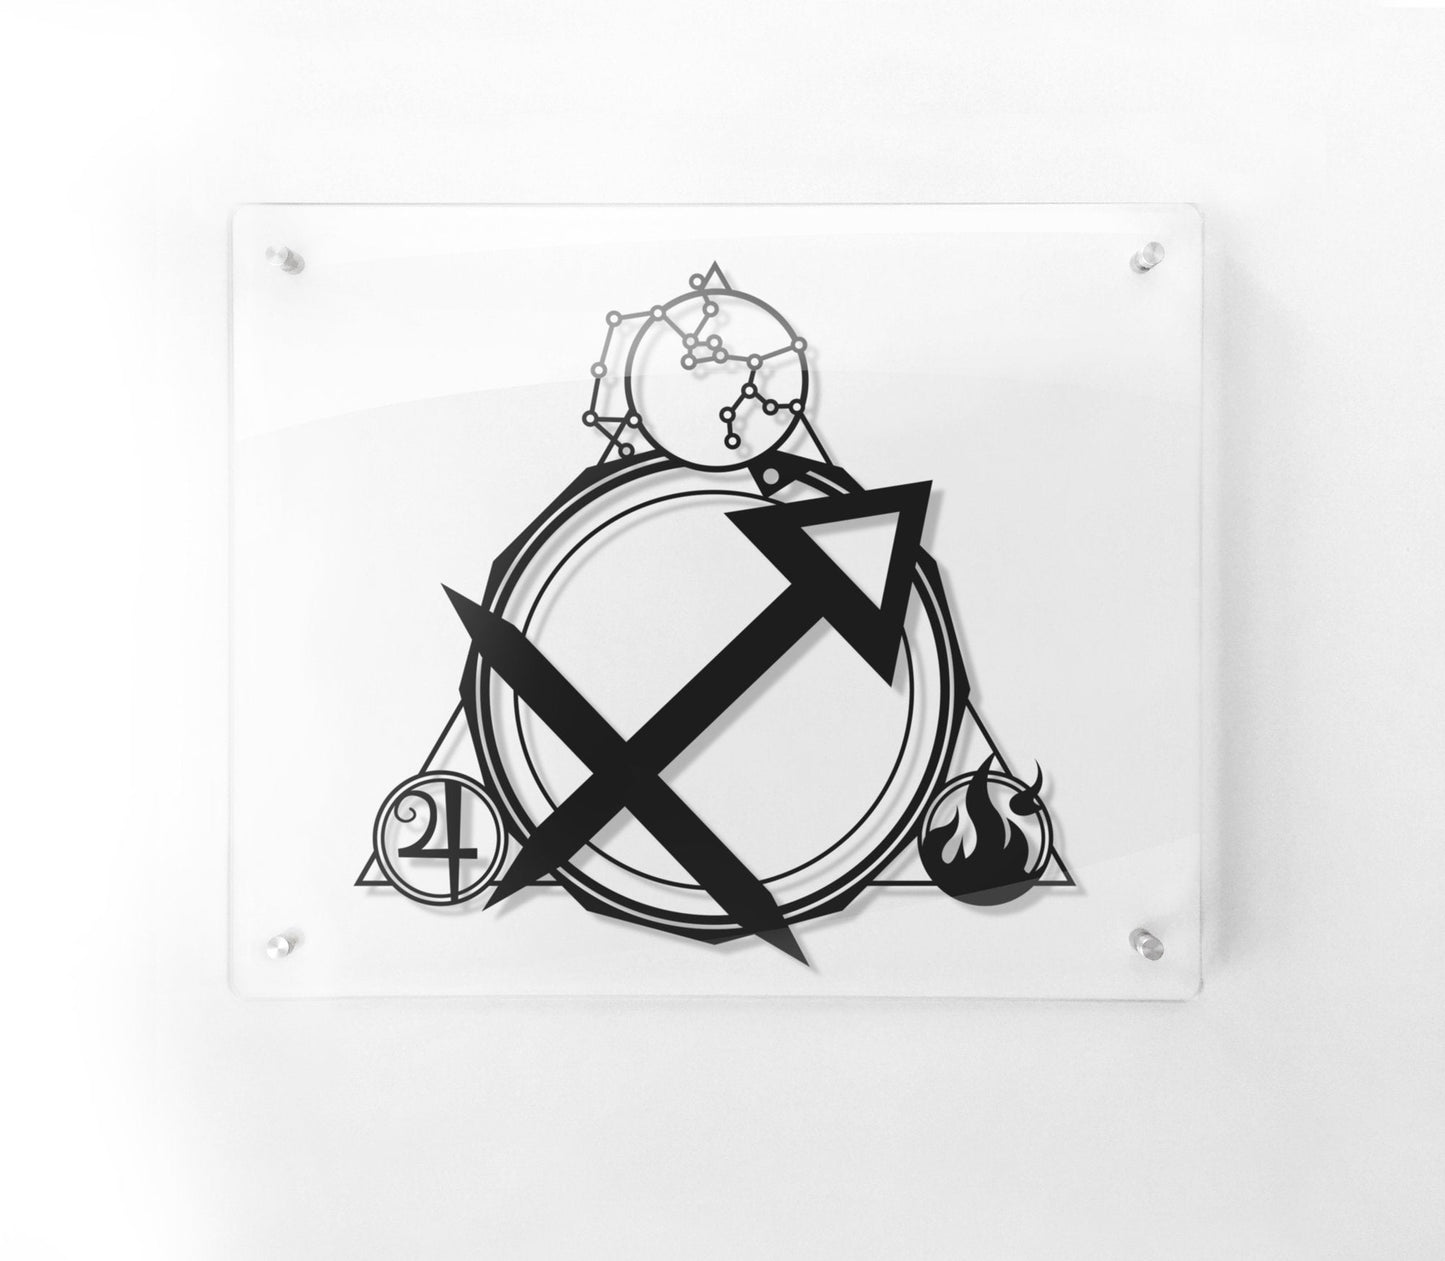 FRAMED Sagittarius Star Sign - paper cut art